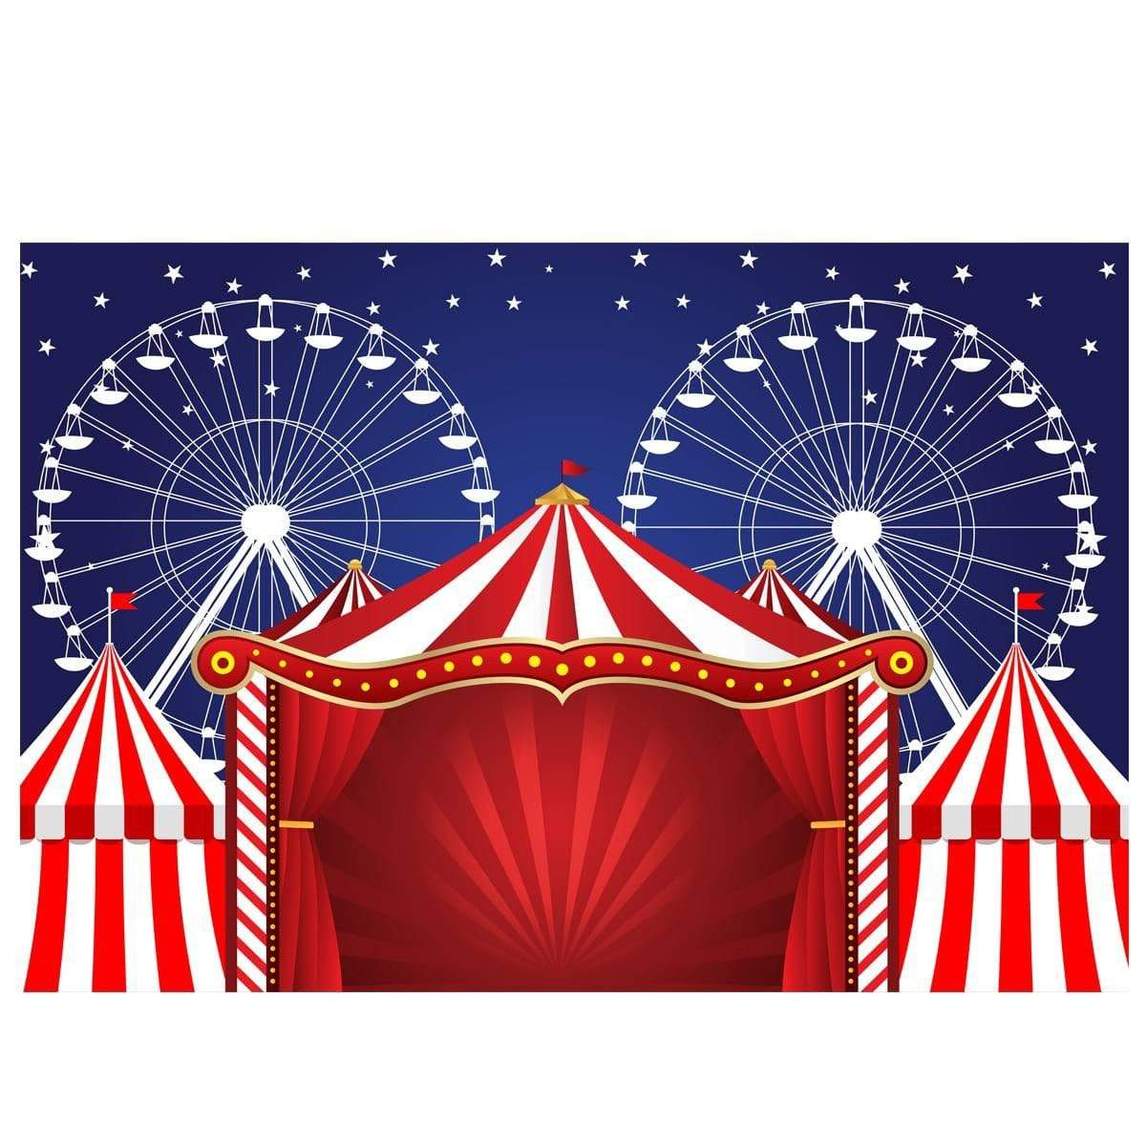 Allenjoy Circus Background Circus Carnival Ferris Wheel Backdrop